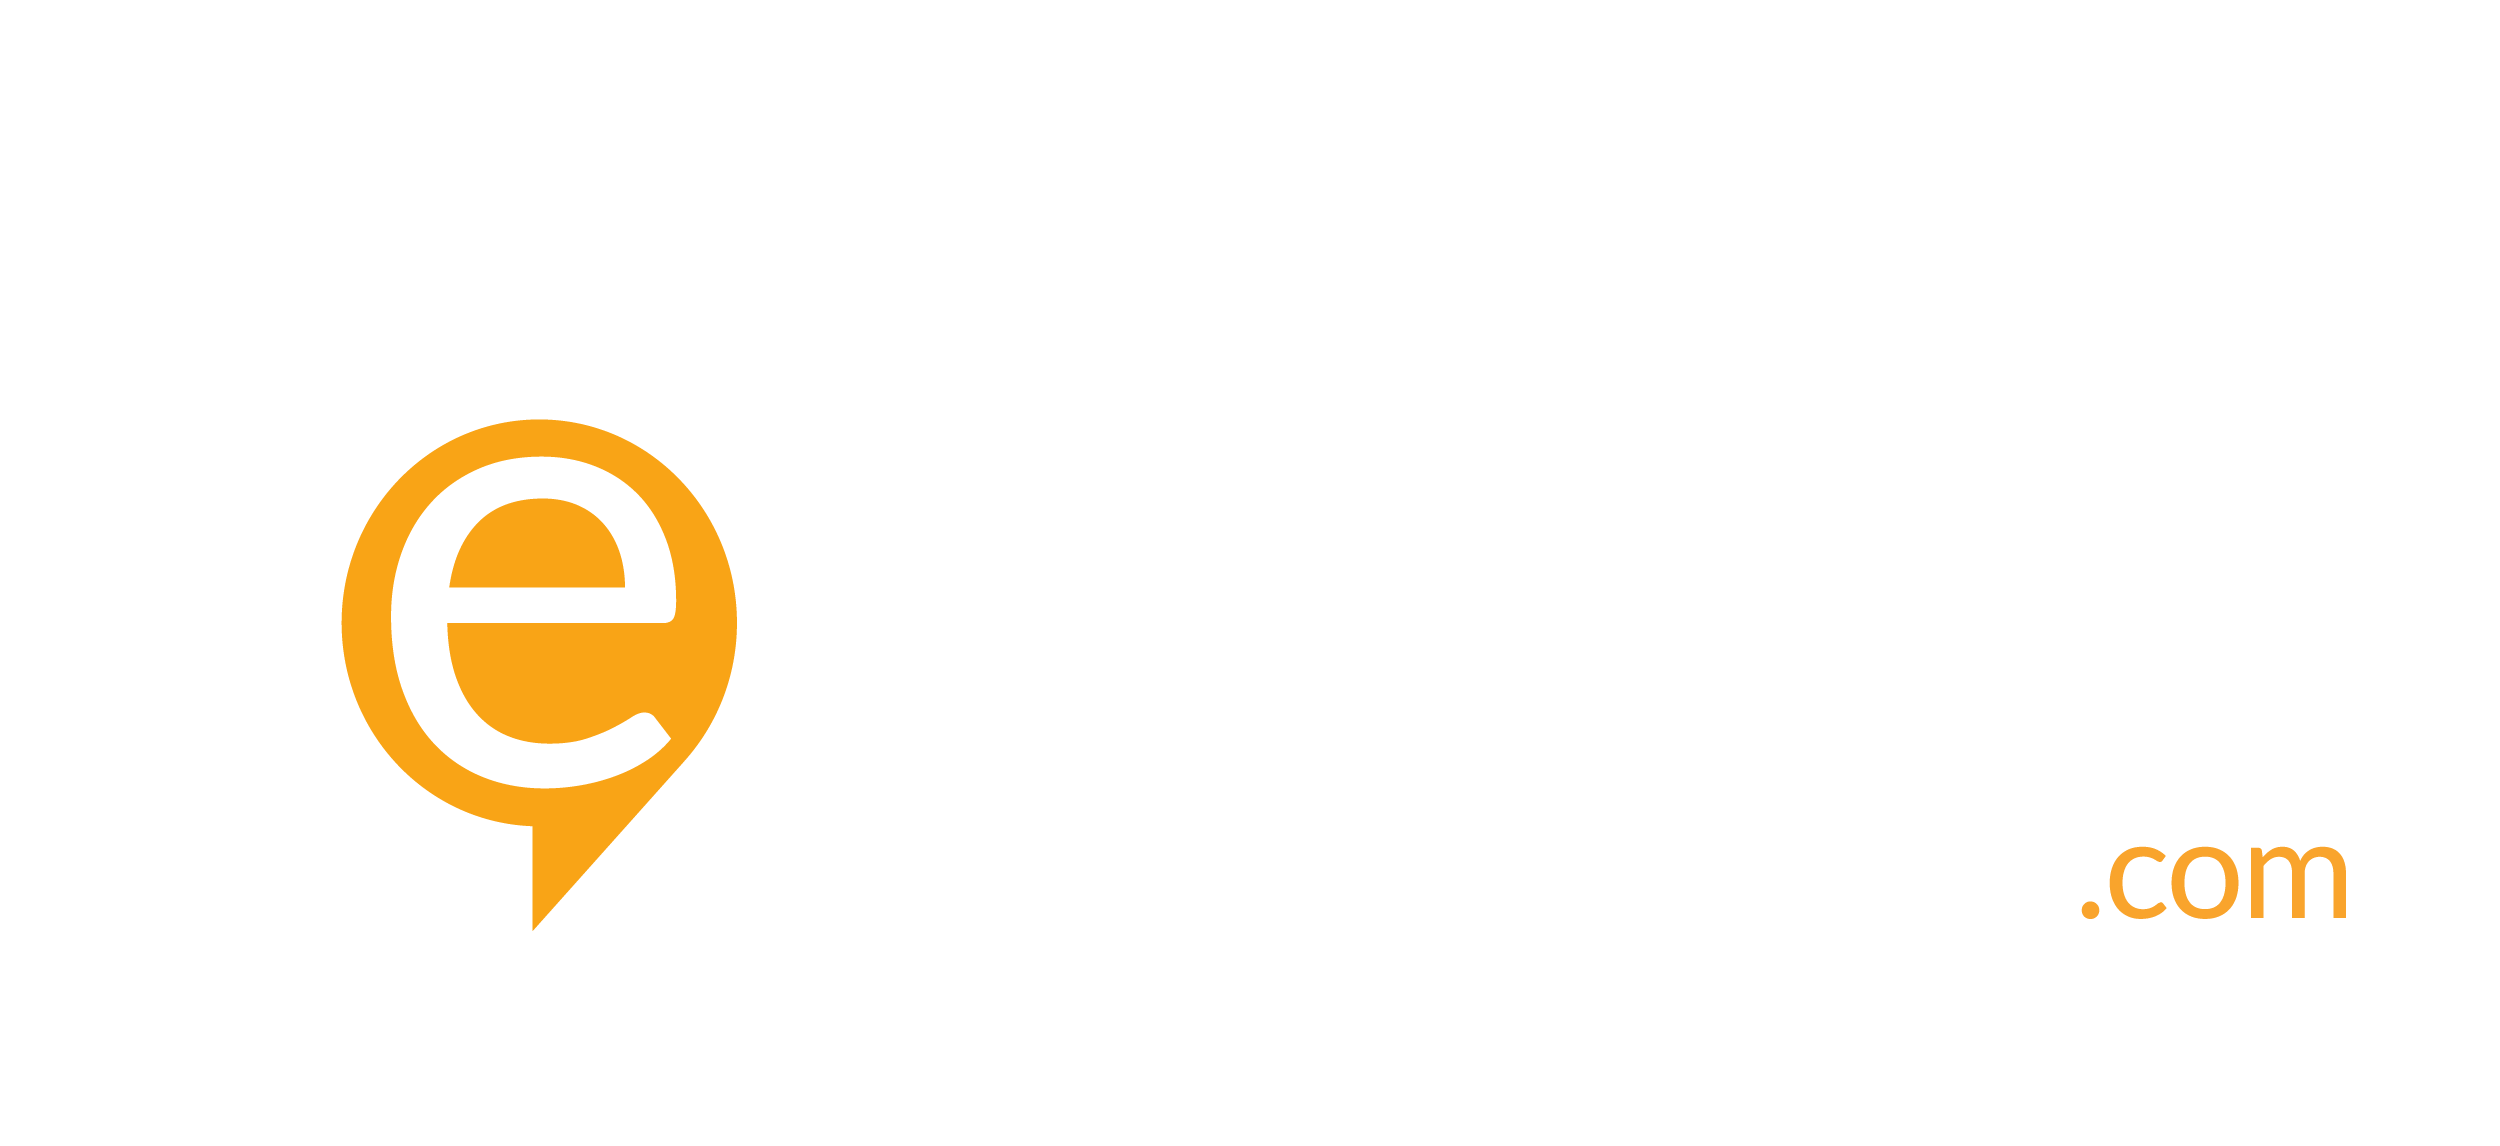 Accueil_logo_GC